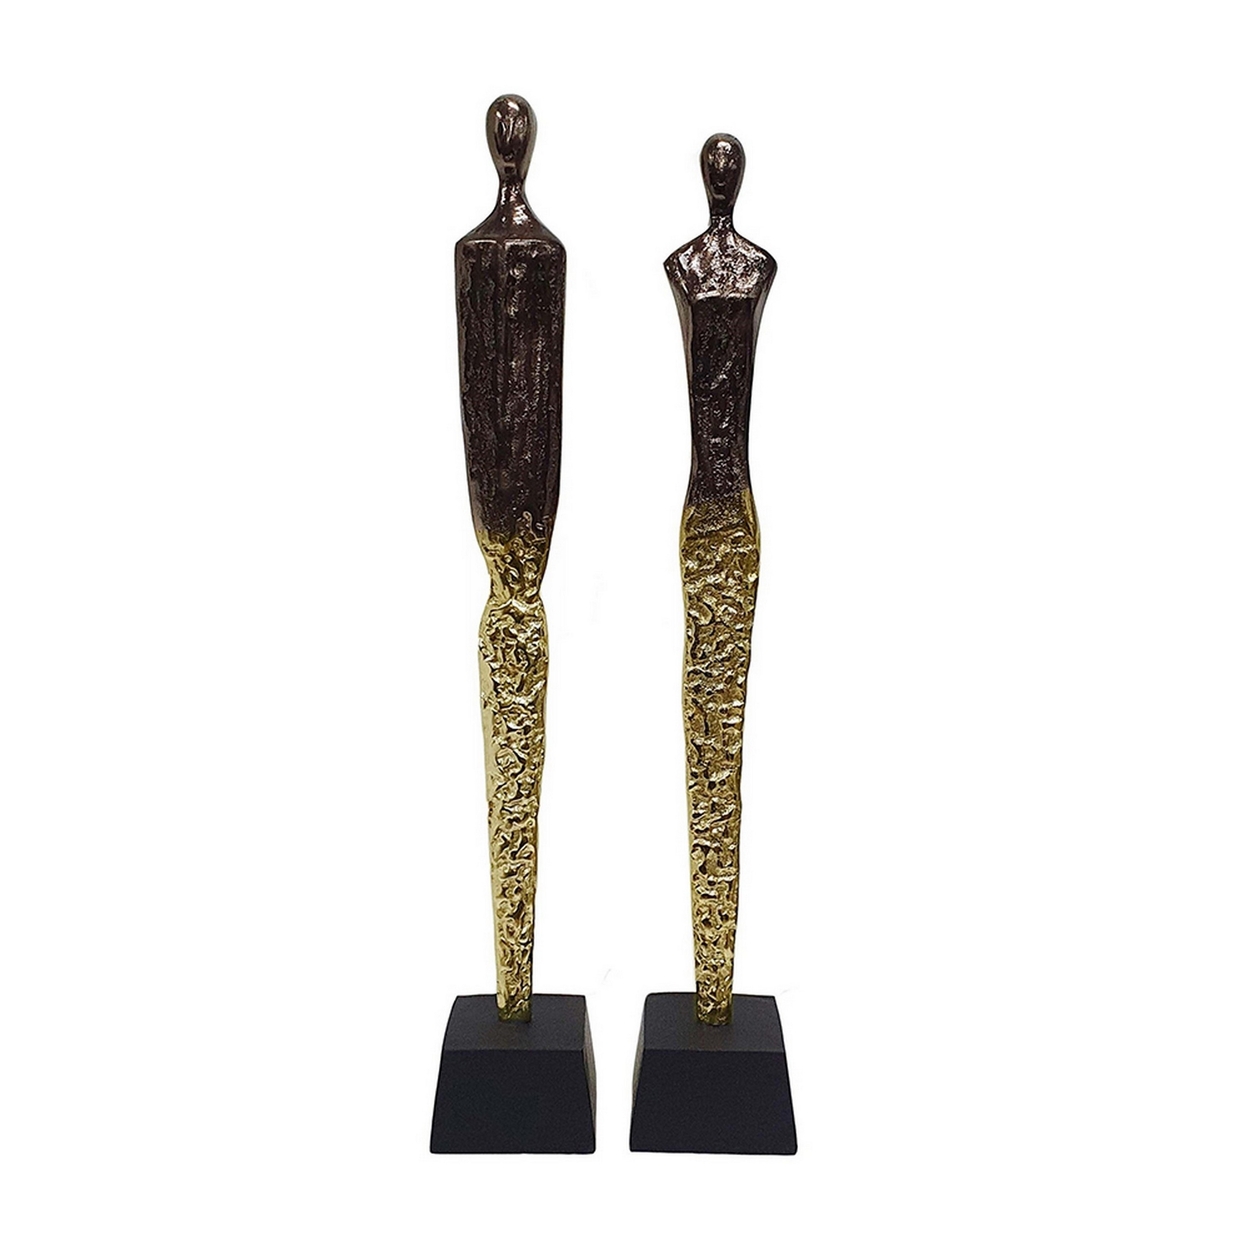 Set Of 2 Abstract Human Statuettes, Hammered Texture, Aluminum, Black Gold- Saltoro Sherpi